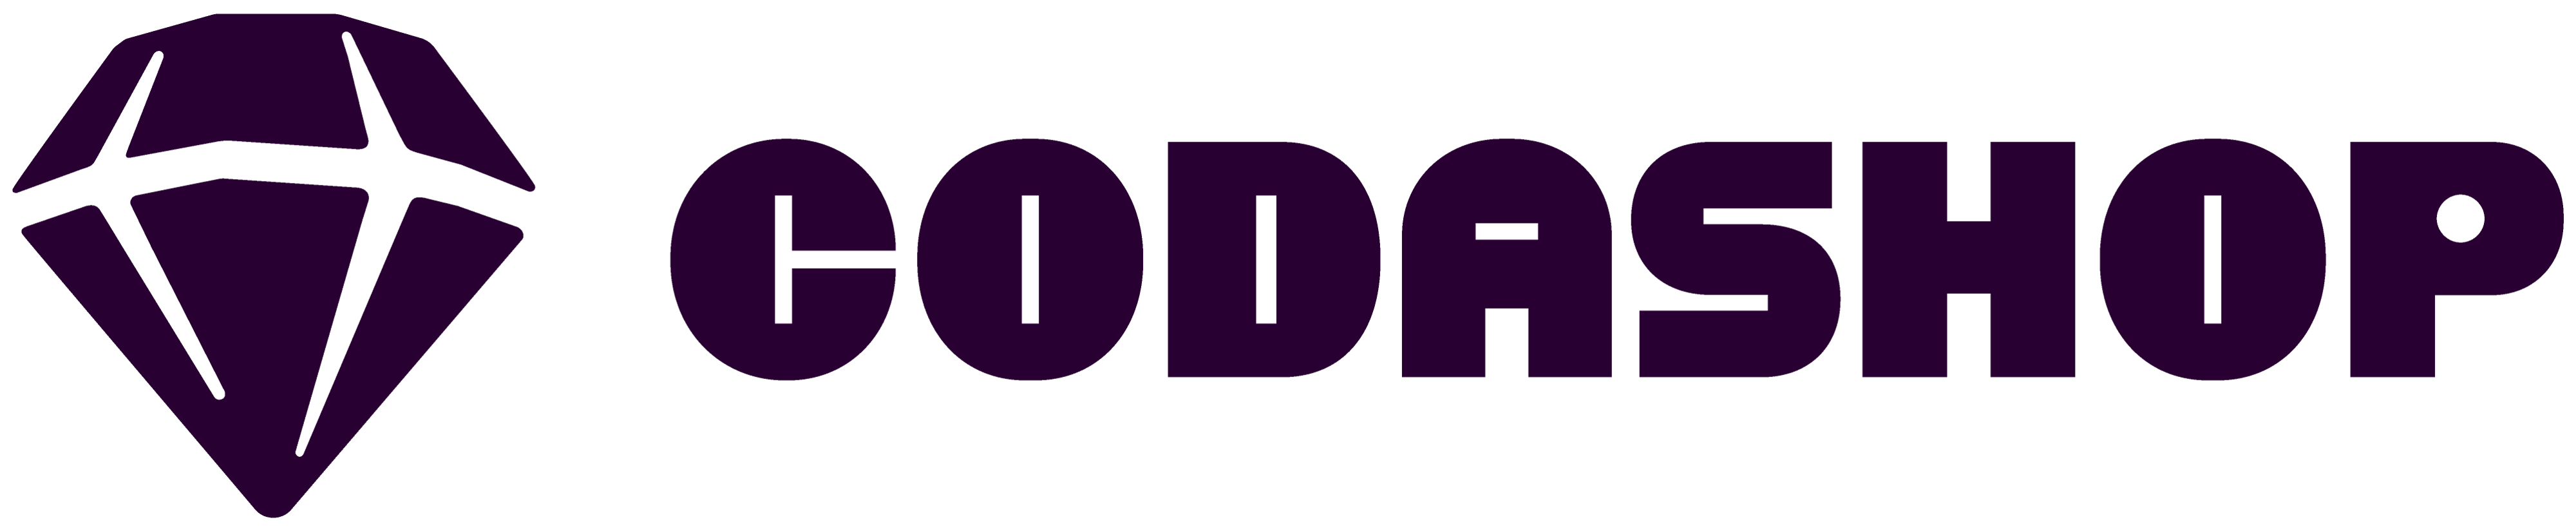 Codashop-logo-horisontal-dark-matter.png